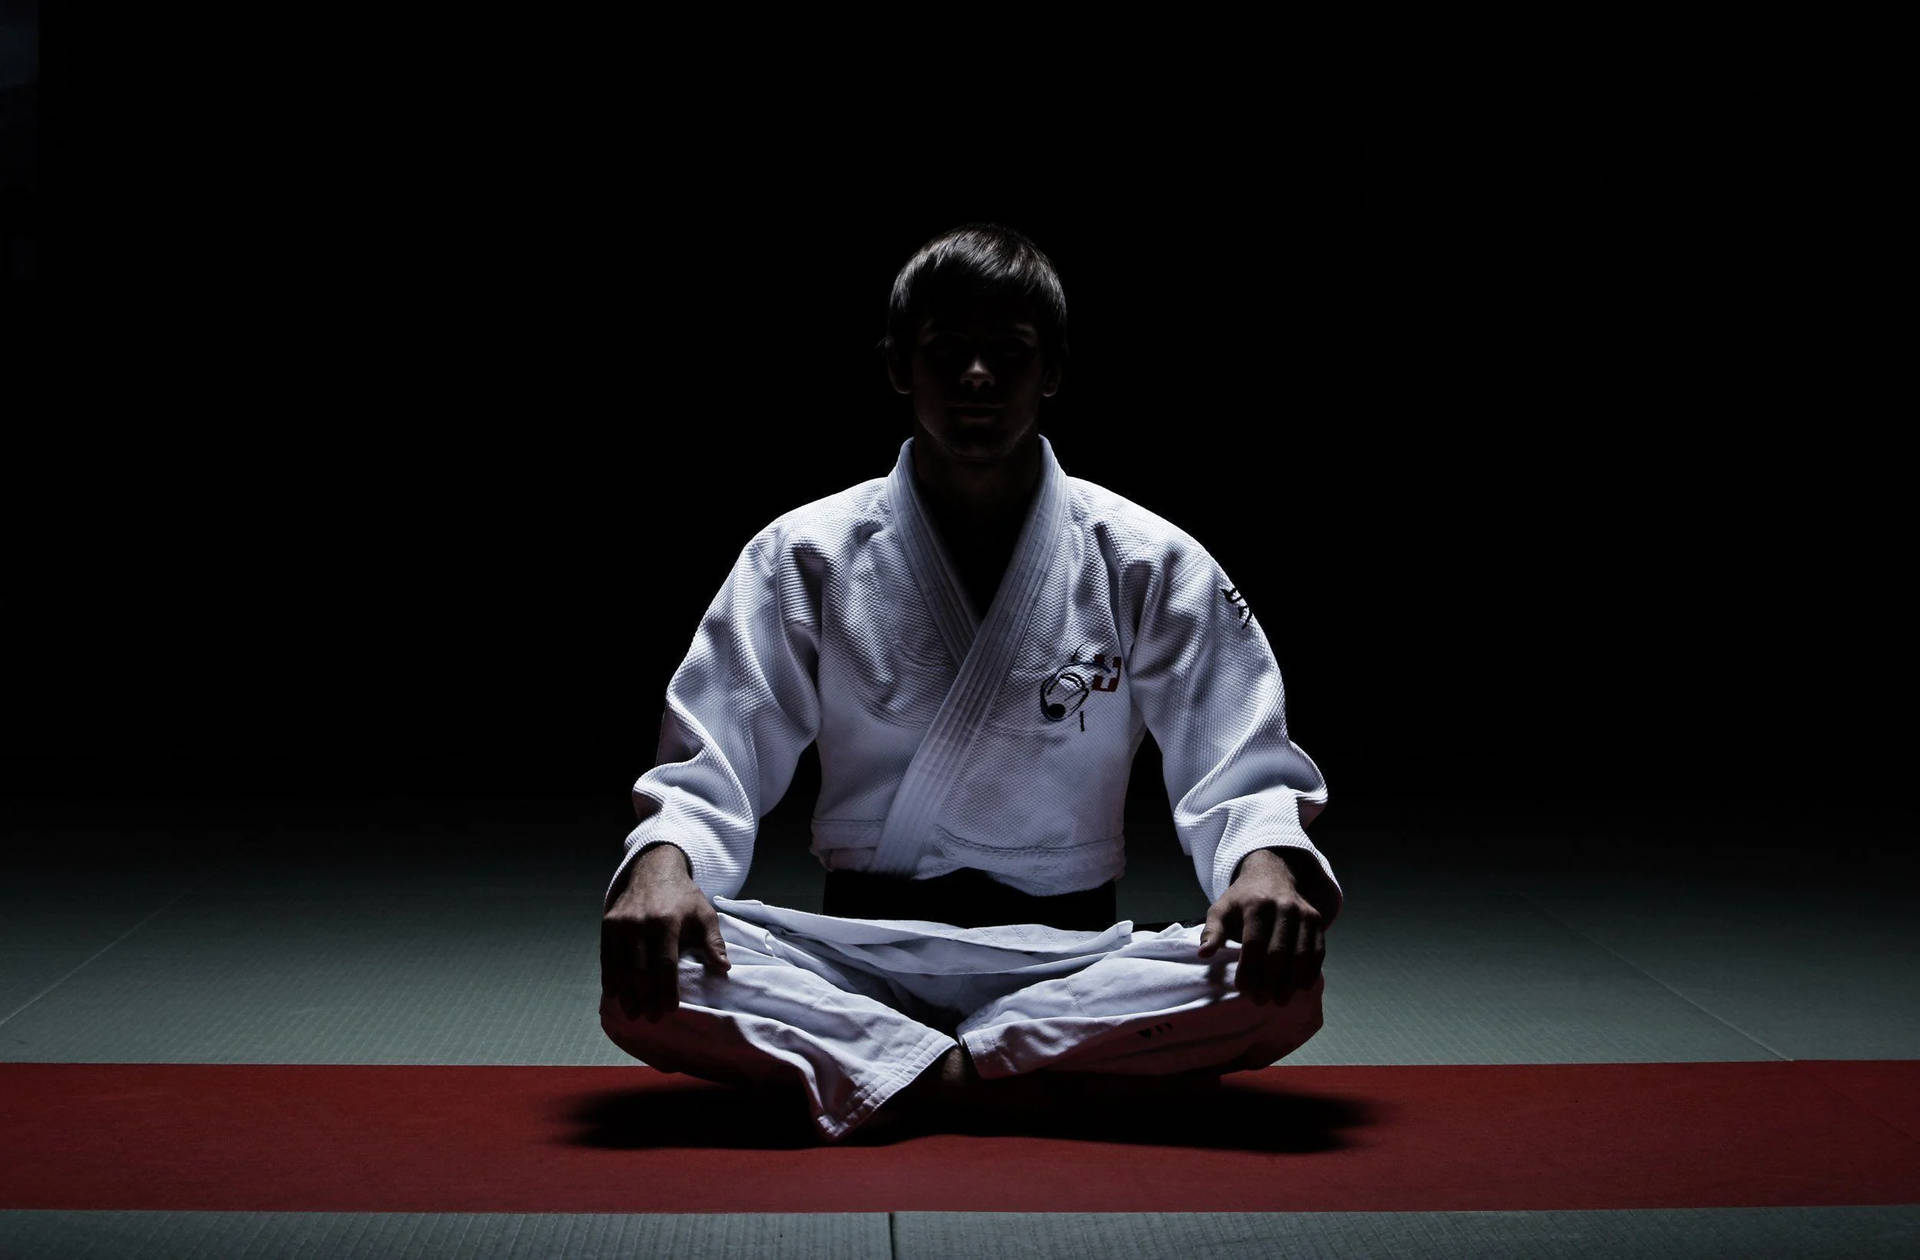 Judo In The Dark Wallpaper